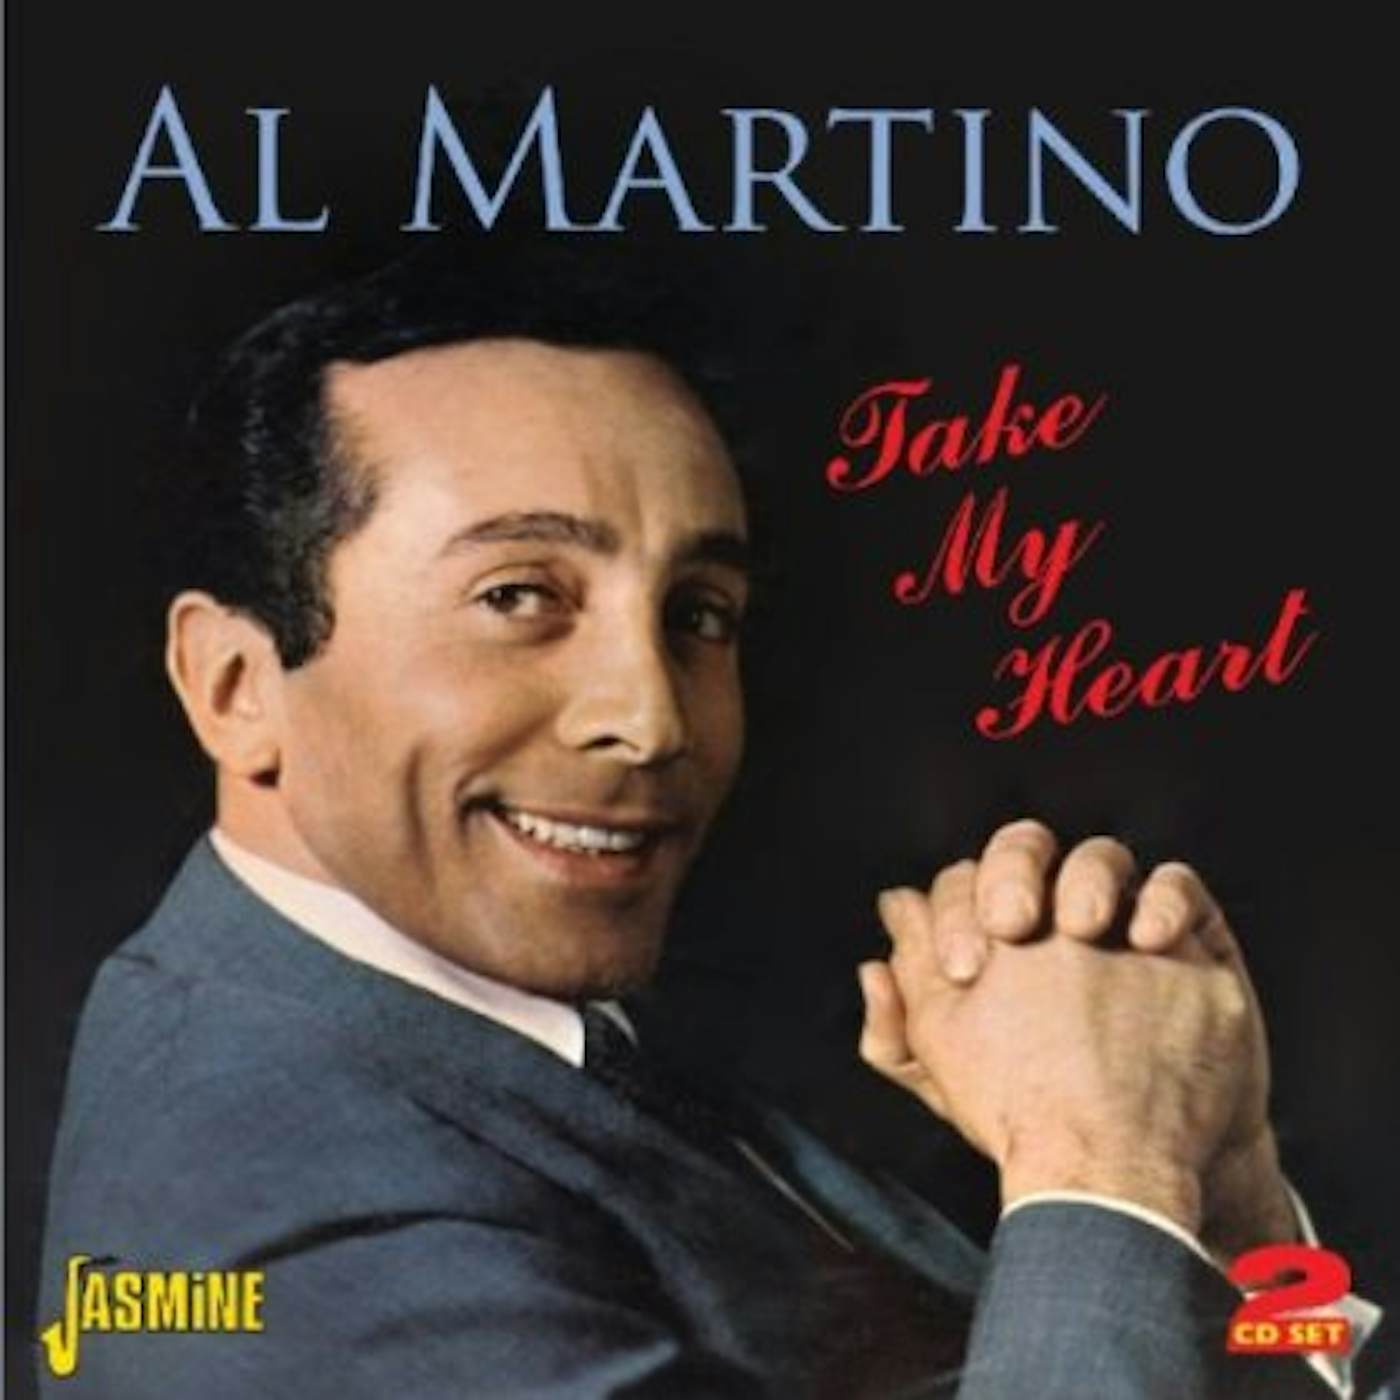 Al Martino TAKE MY HEART CD